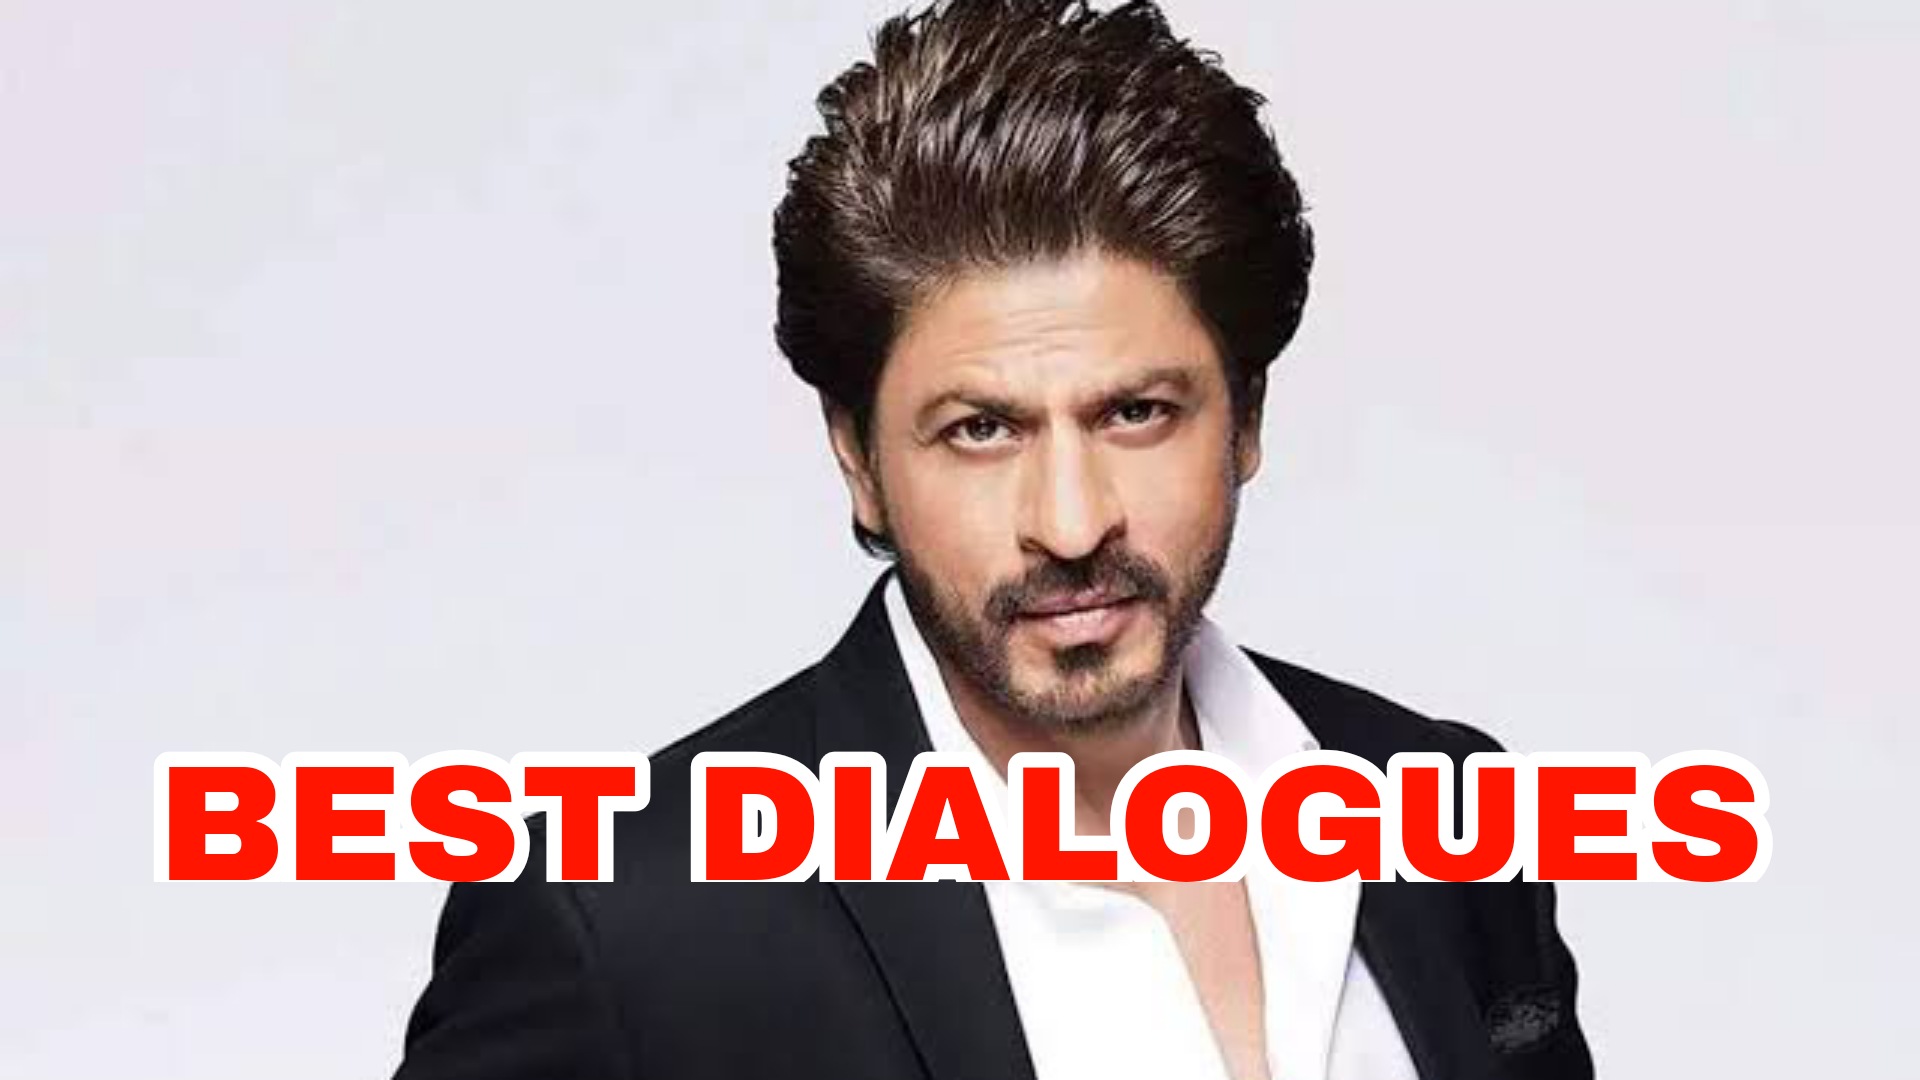 Shahrukh khan famous dialogue